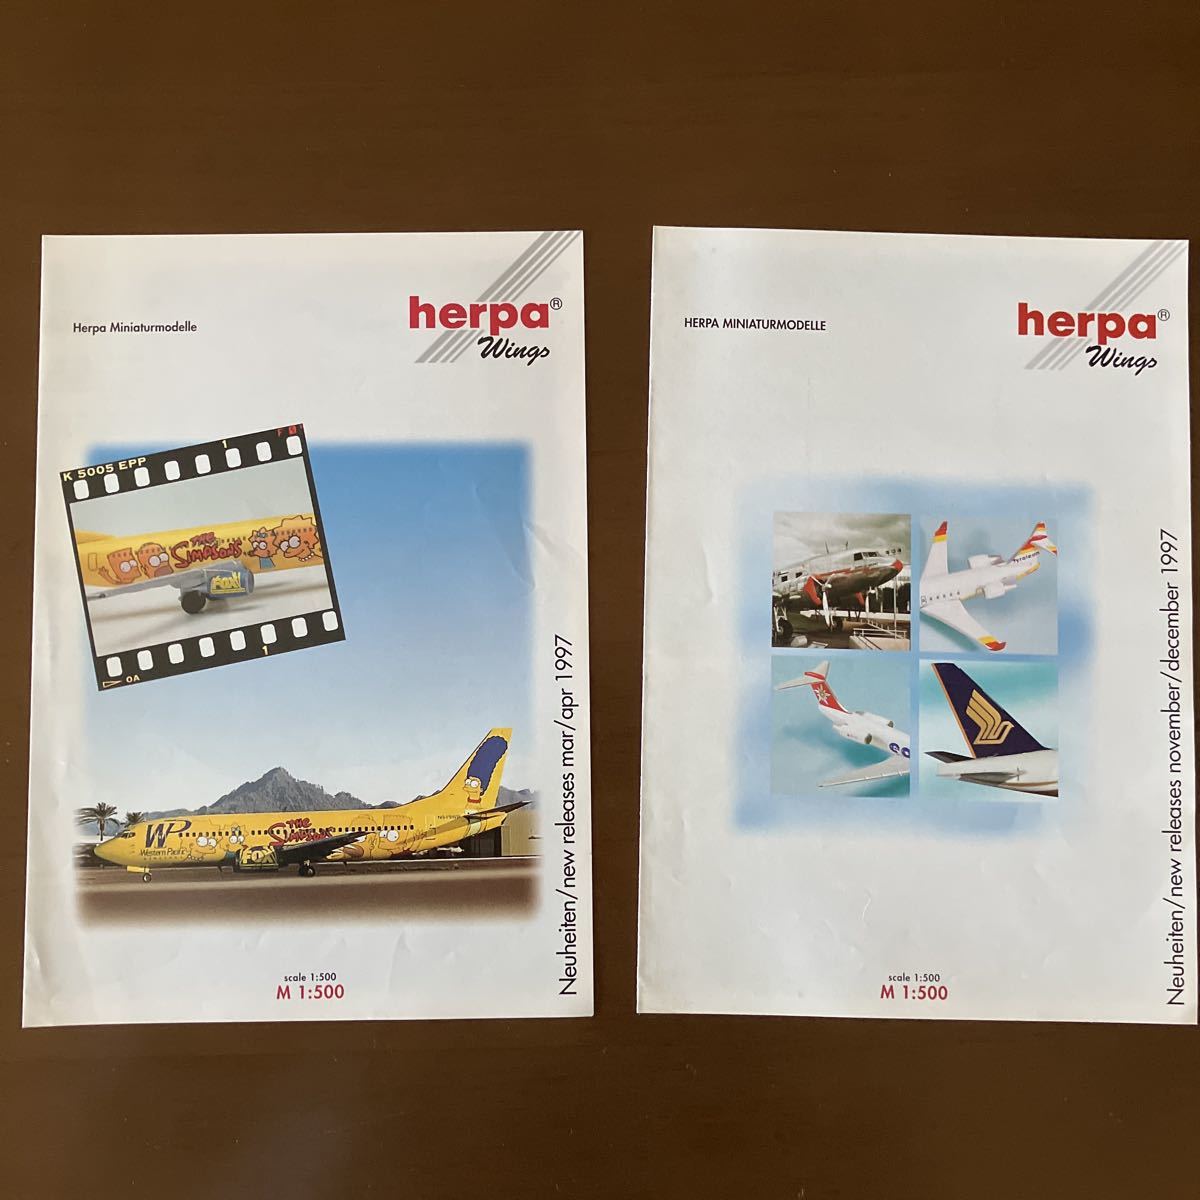 herpa Herpa wings 1997 самолет модель проспект mar/apr 1997, november/december 1997